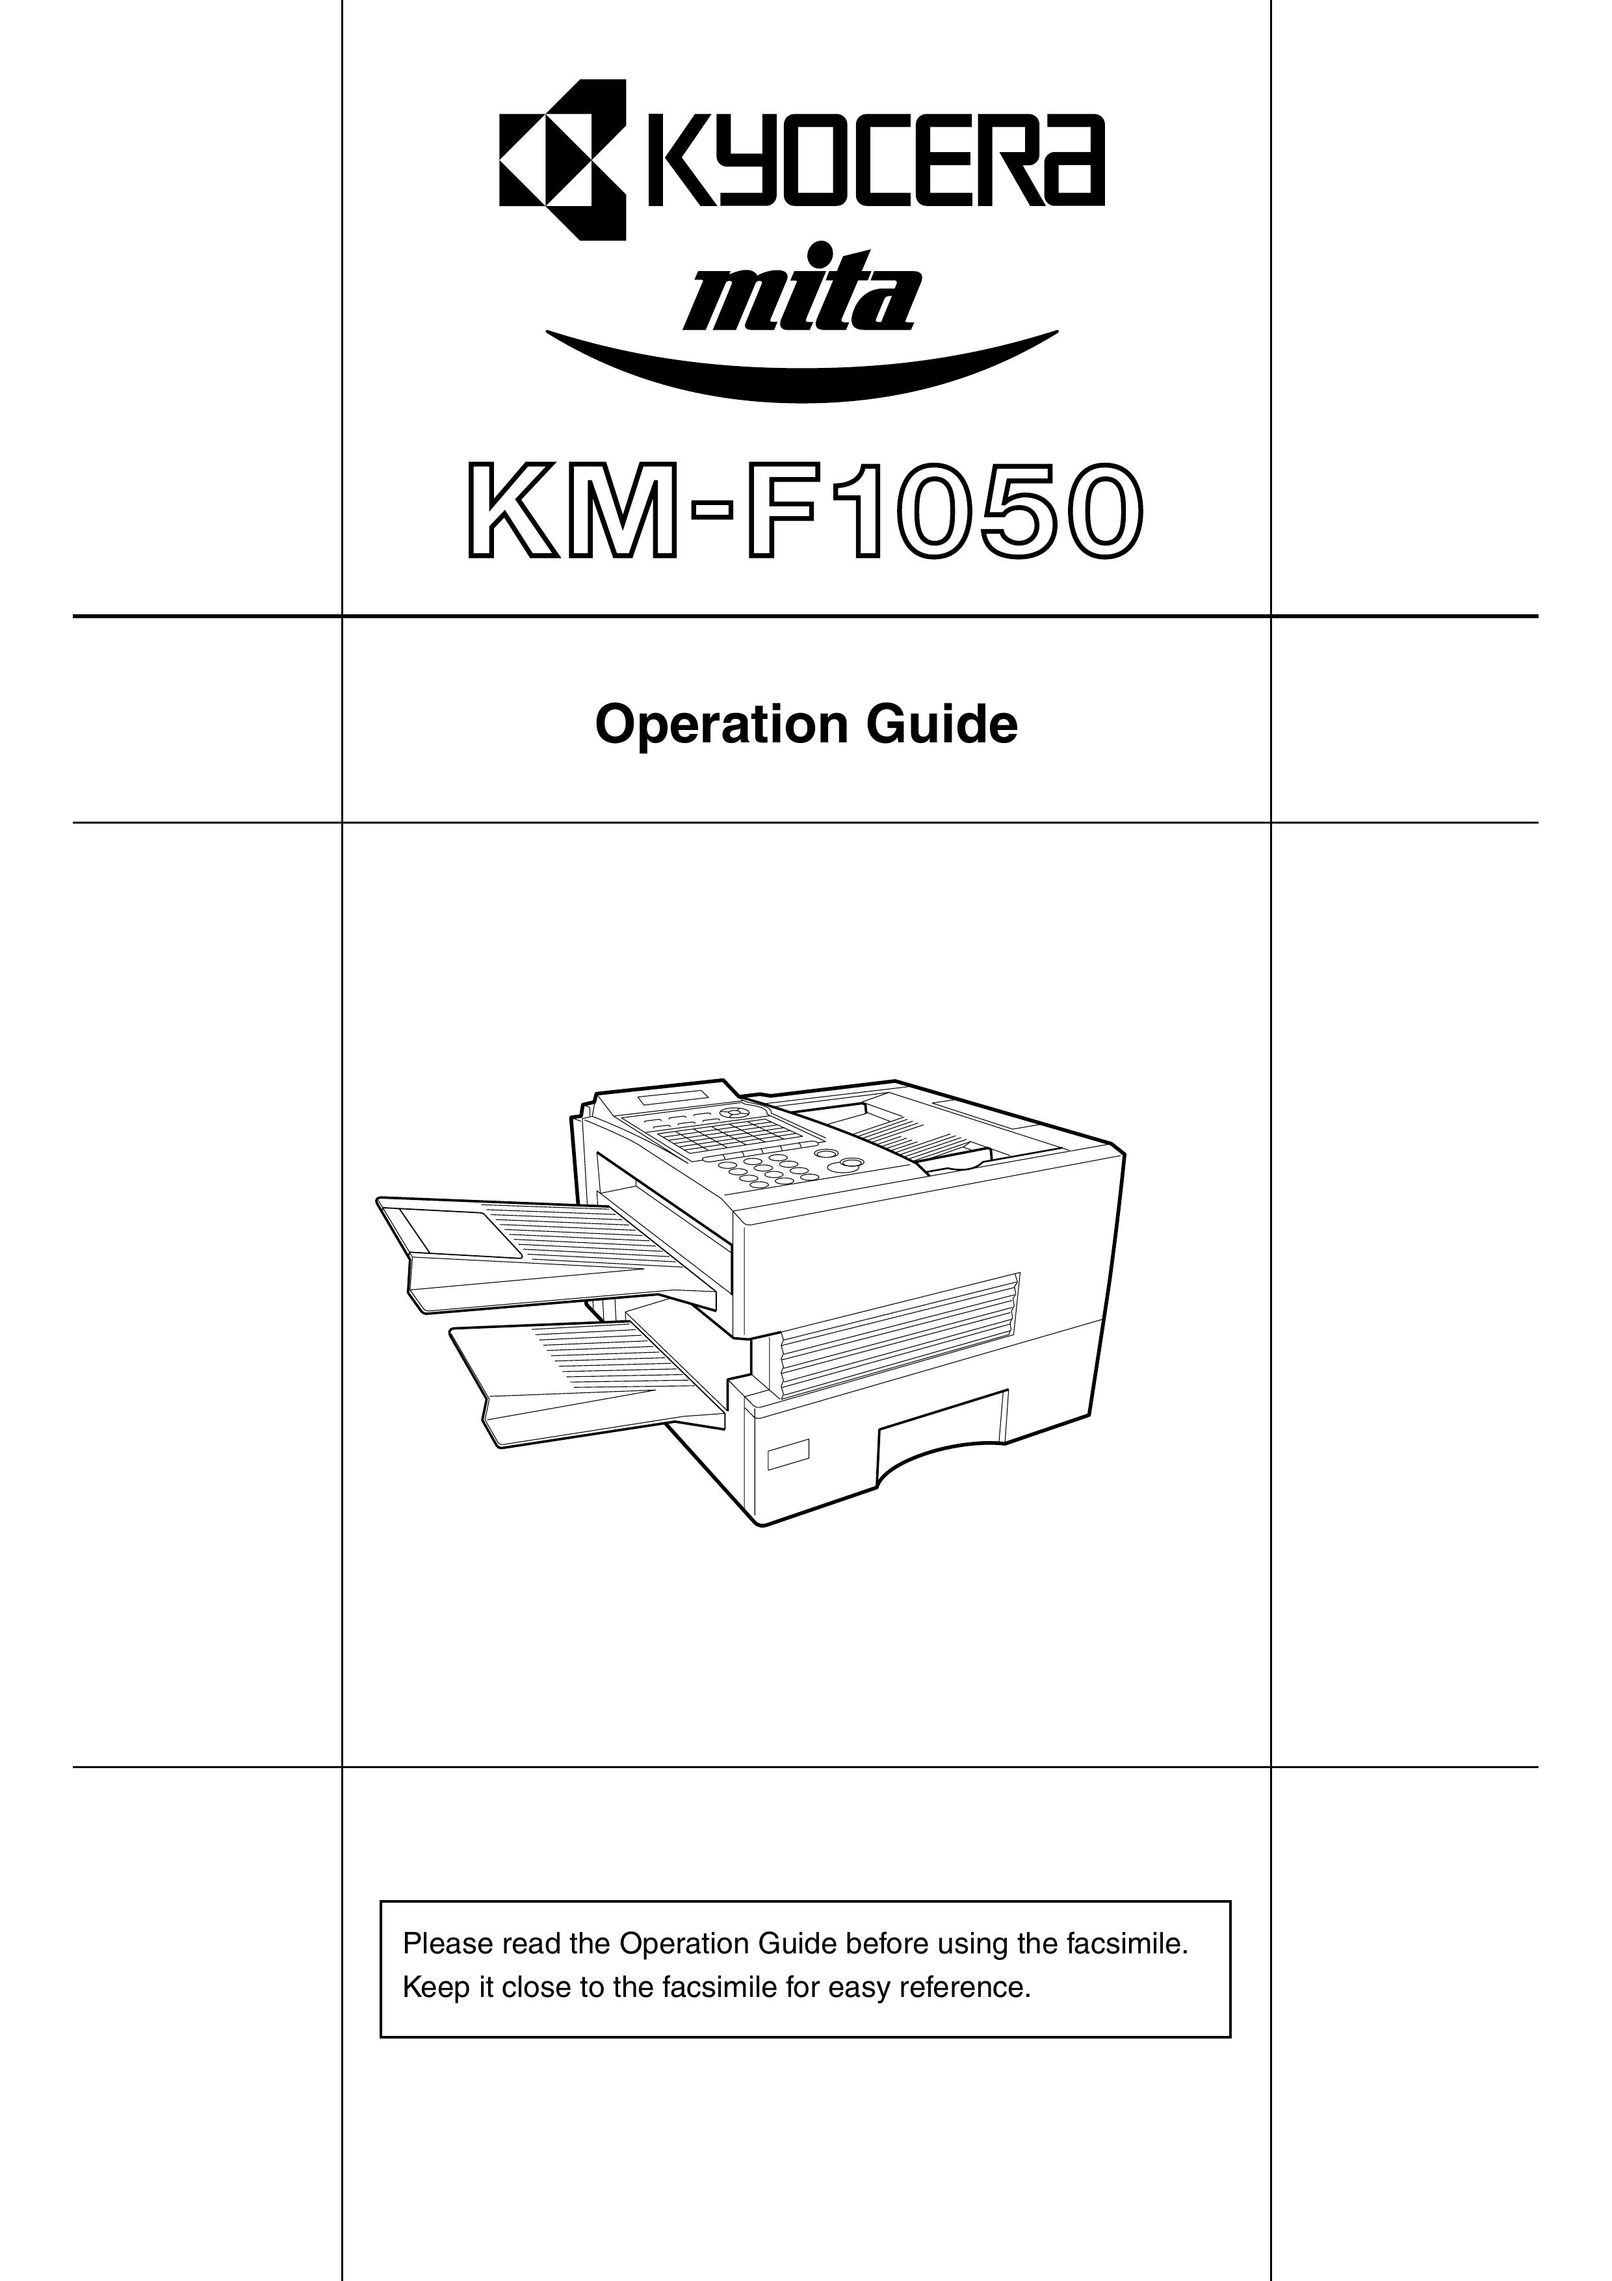 Kyocera km-f1050 Fax Machine User Manual